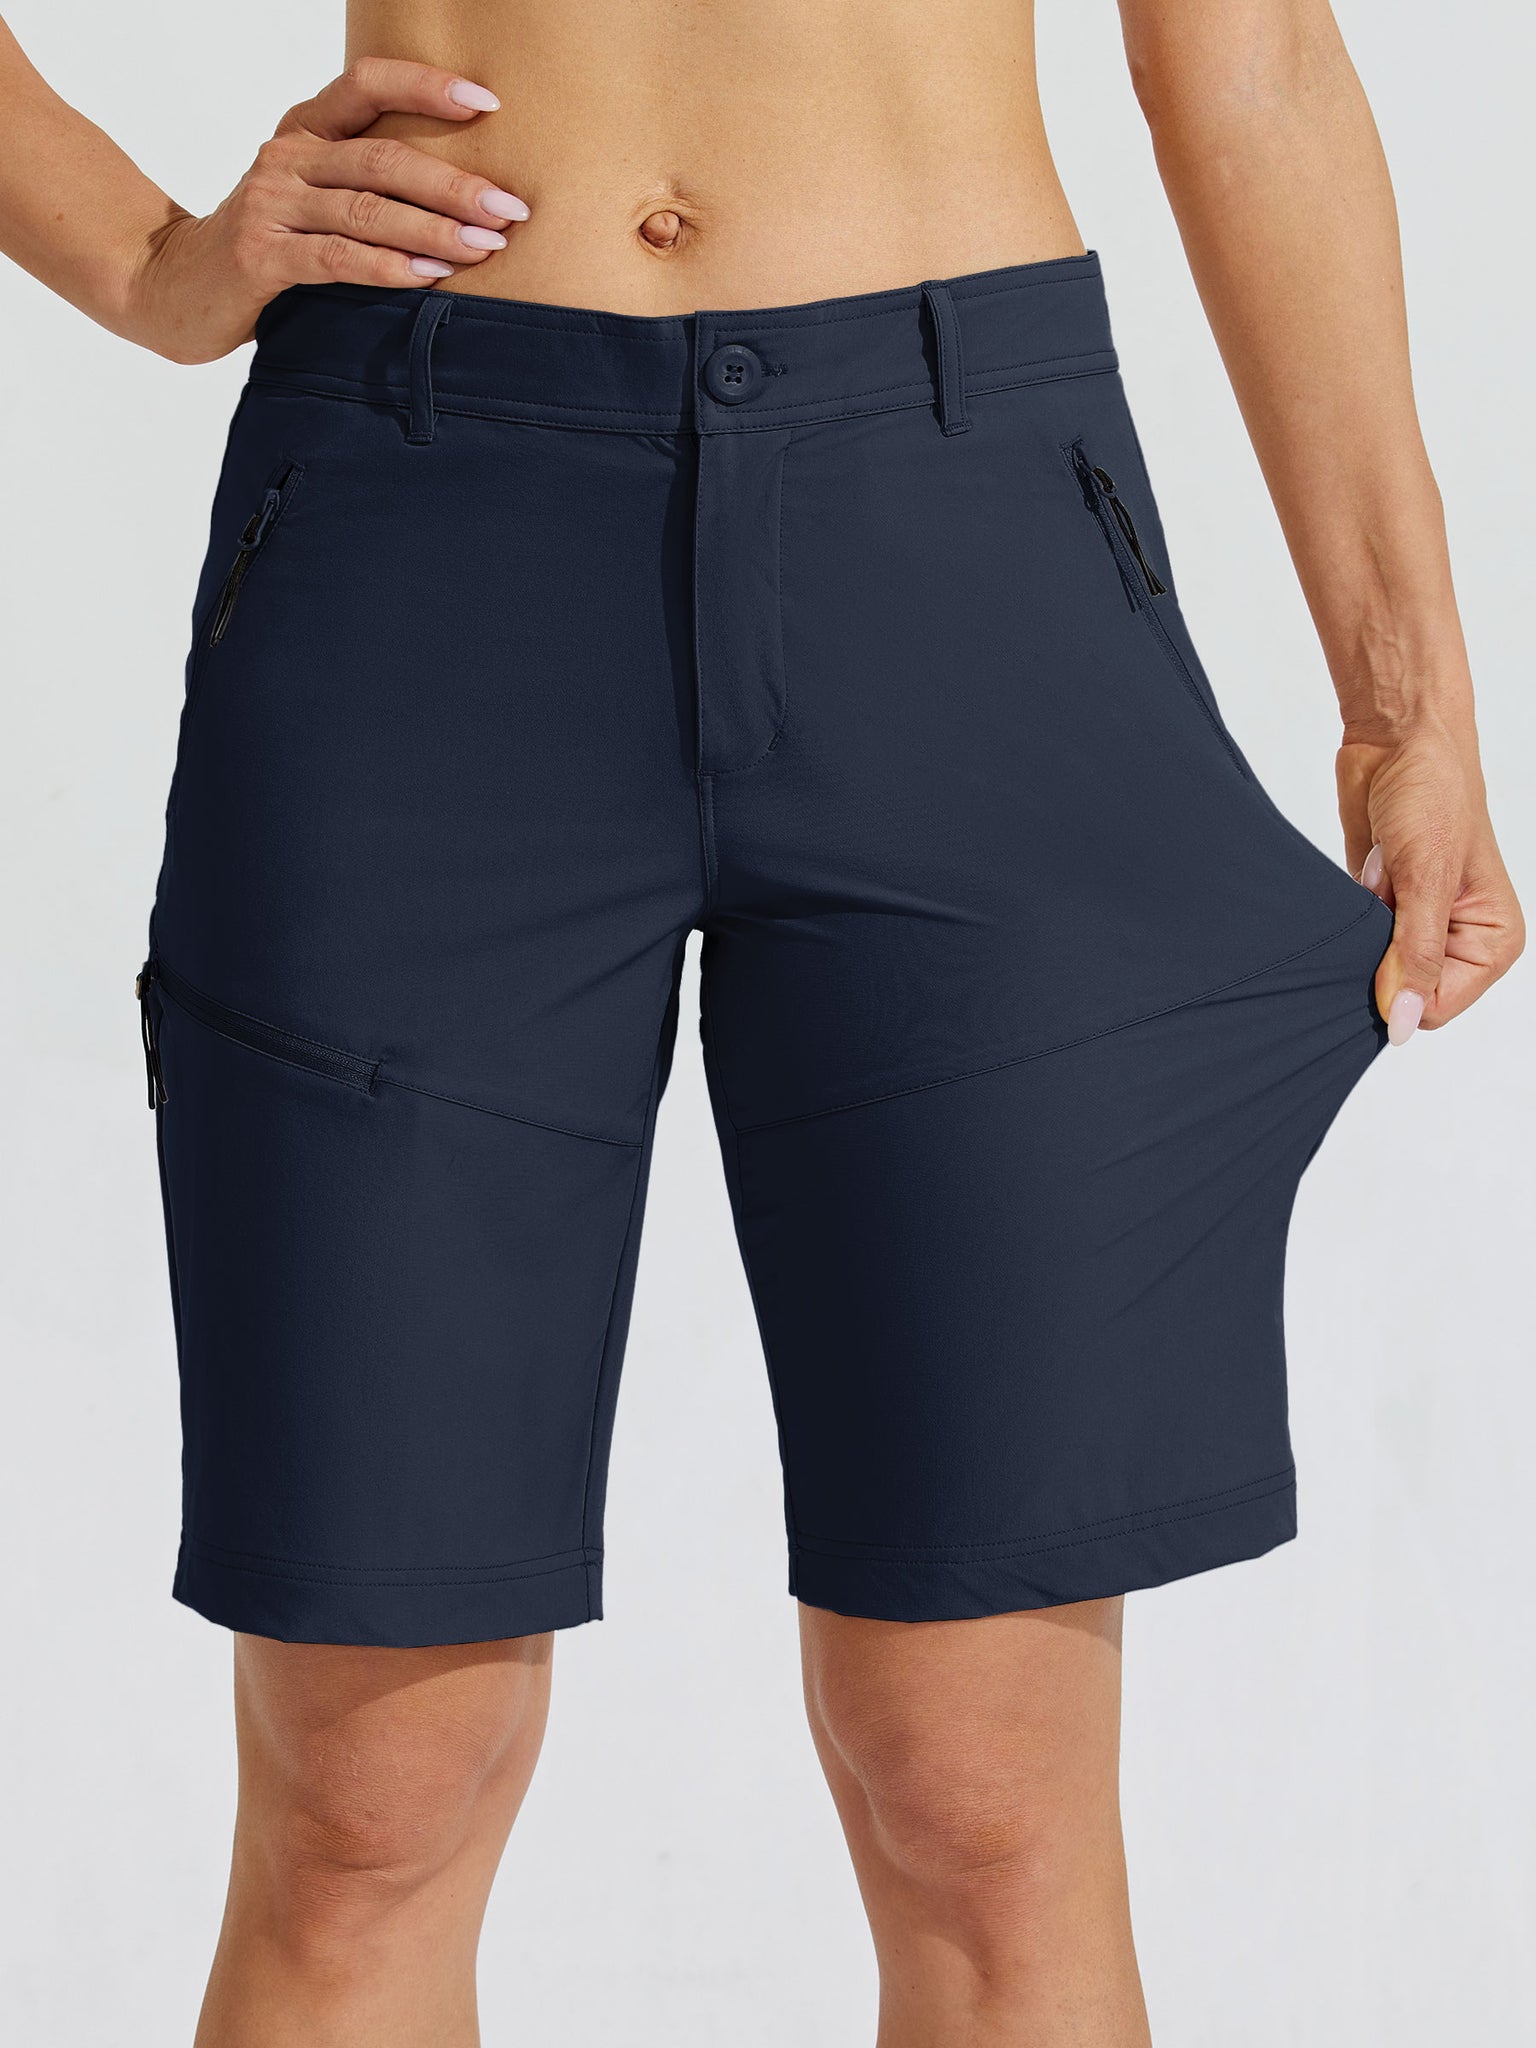 Women's Slim Leg Golf Shorts 10Inch_DeepBlue_model1